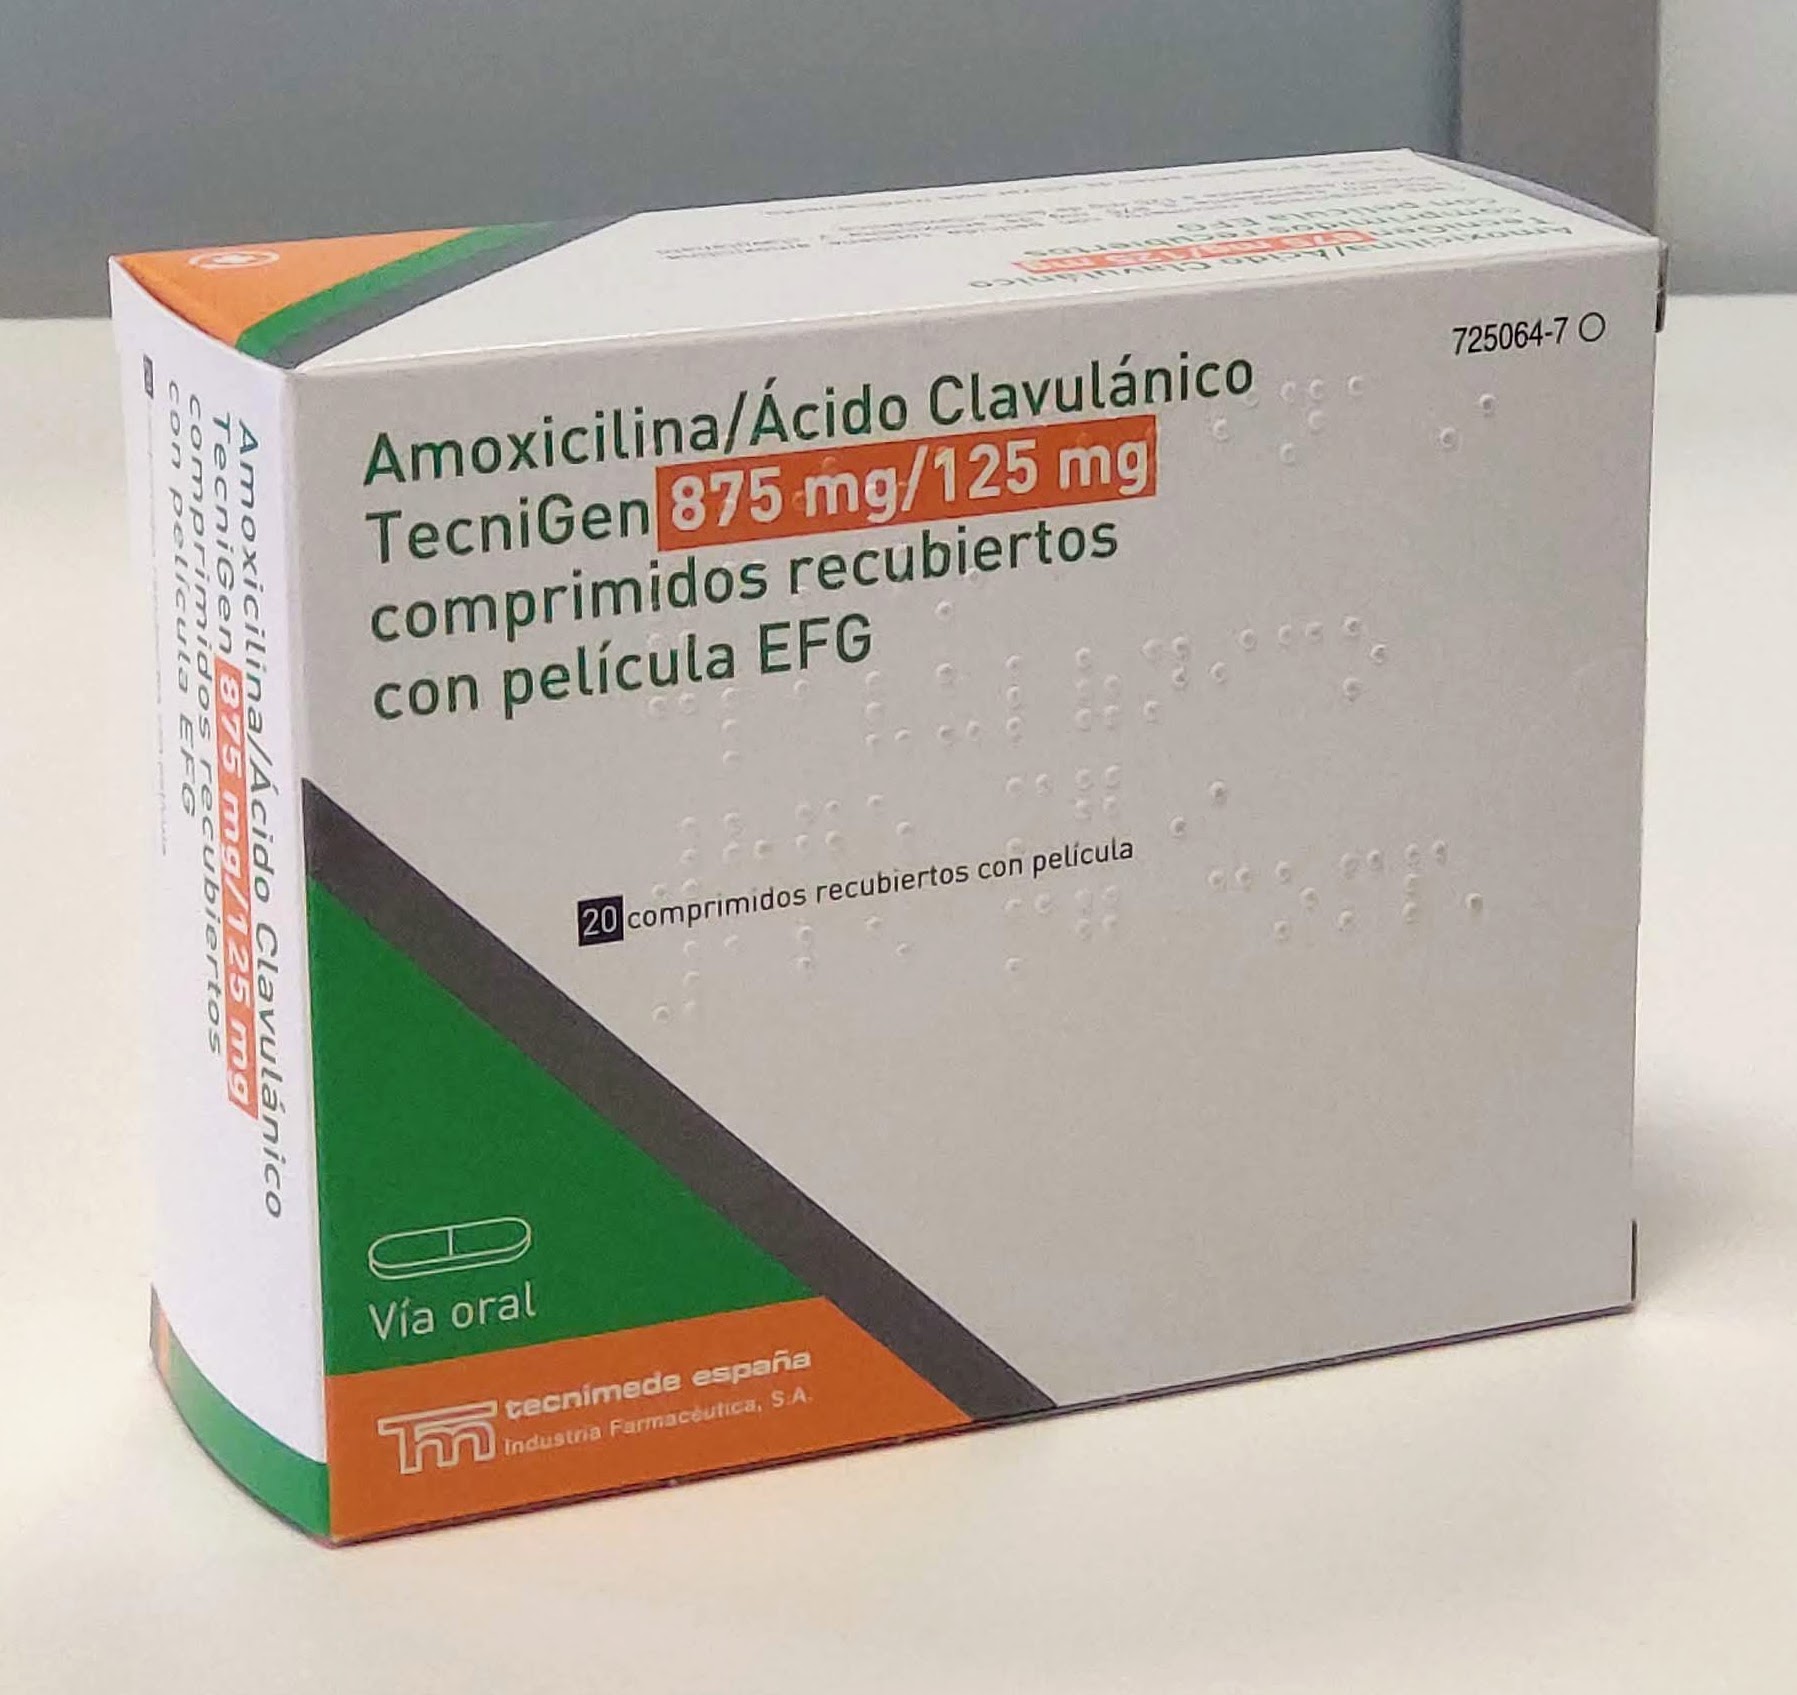 AMOXICILINA/ACIDO CLAVULANICO TECNIGEN EFG 875 mg/125 mg 20 COMPRIMIDOS  RECUBIERTOS - Farmacéuticos